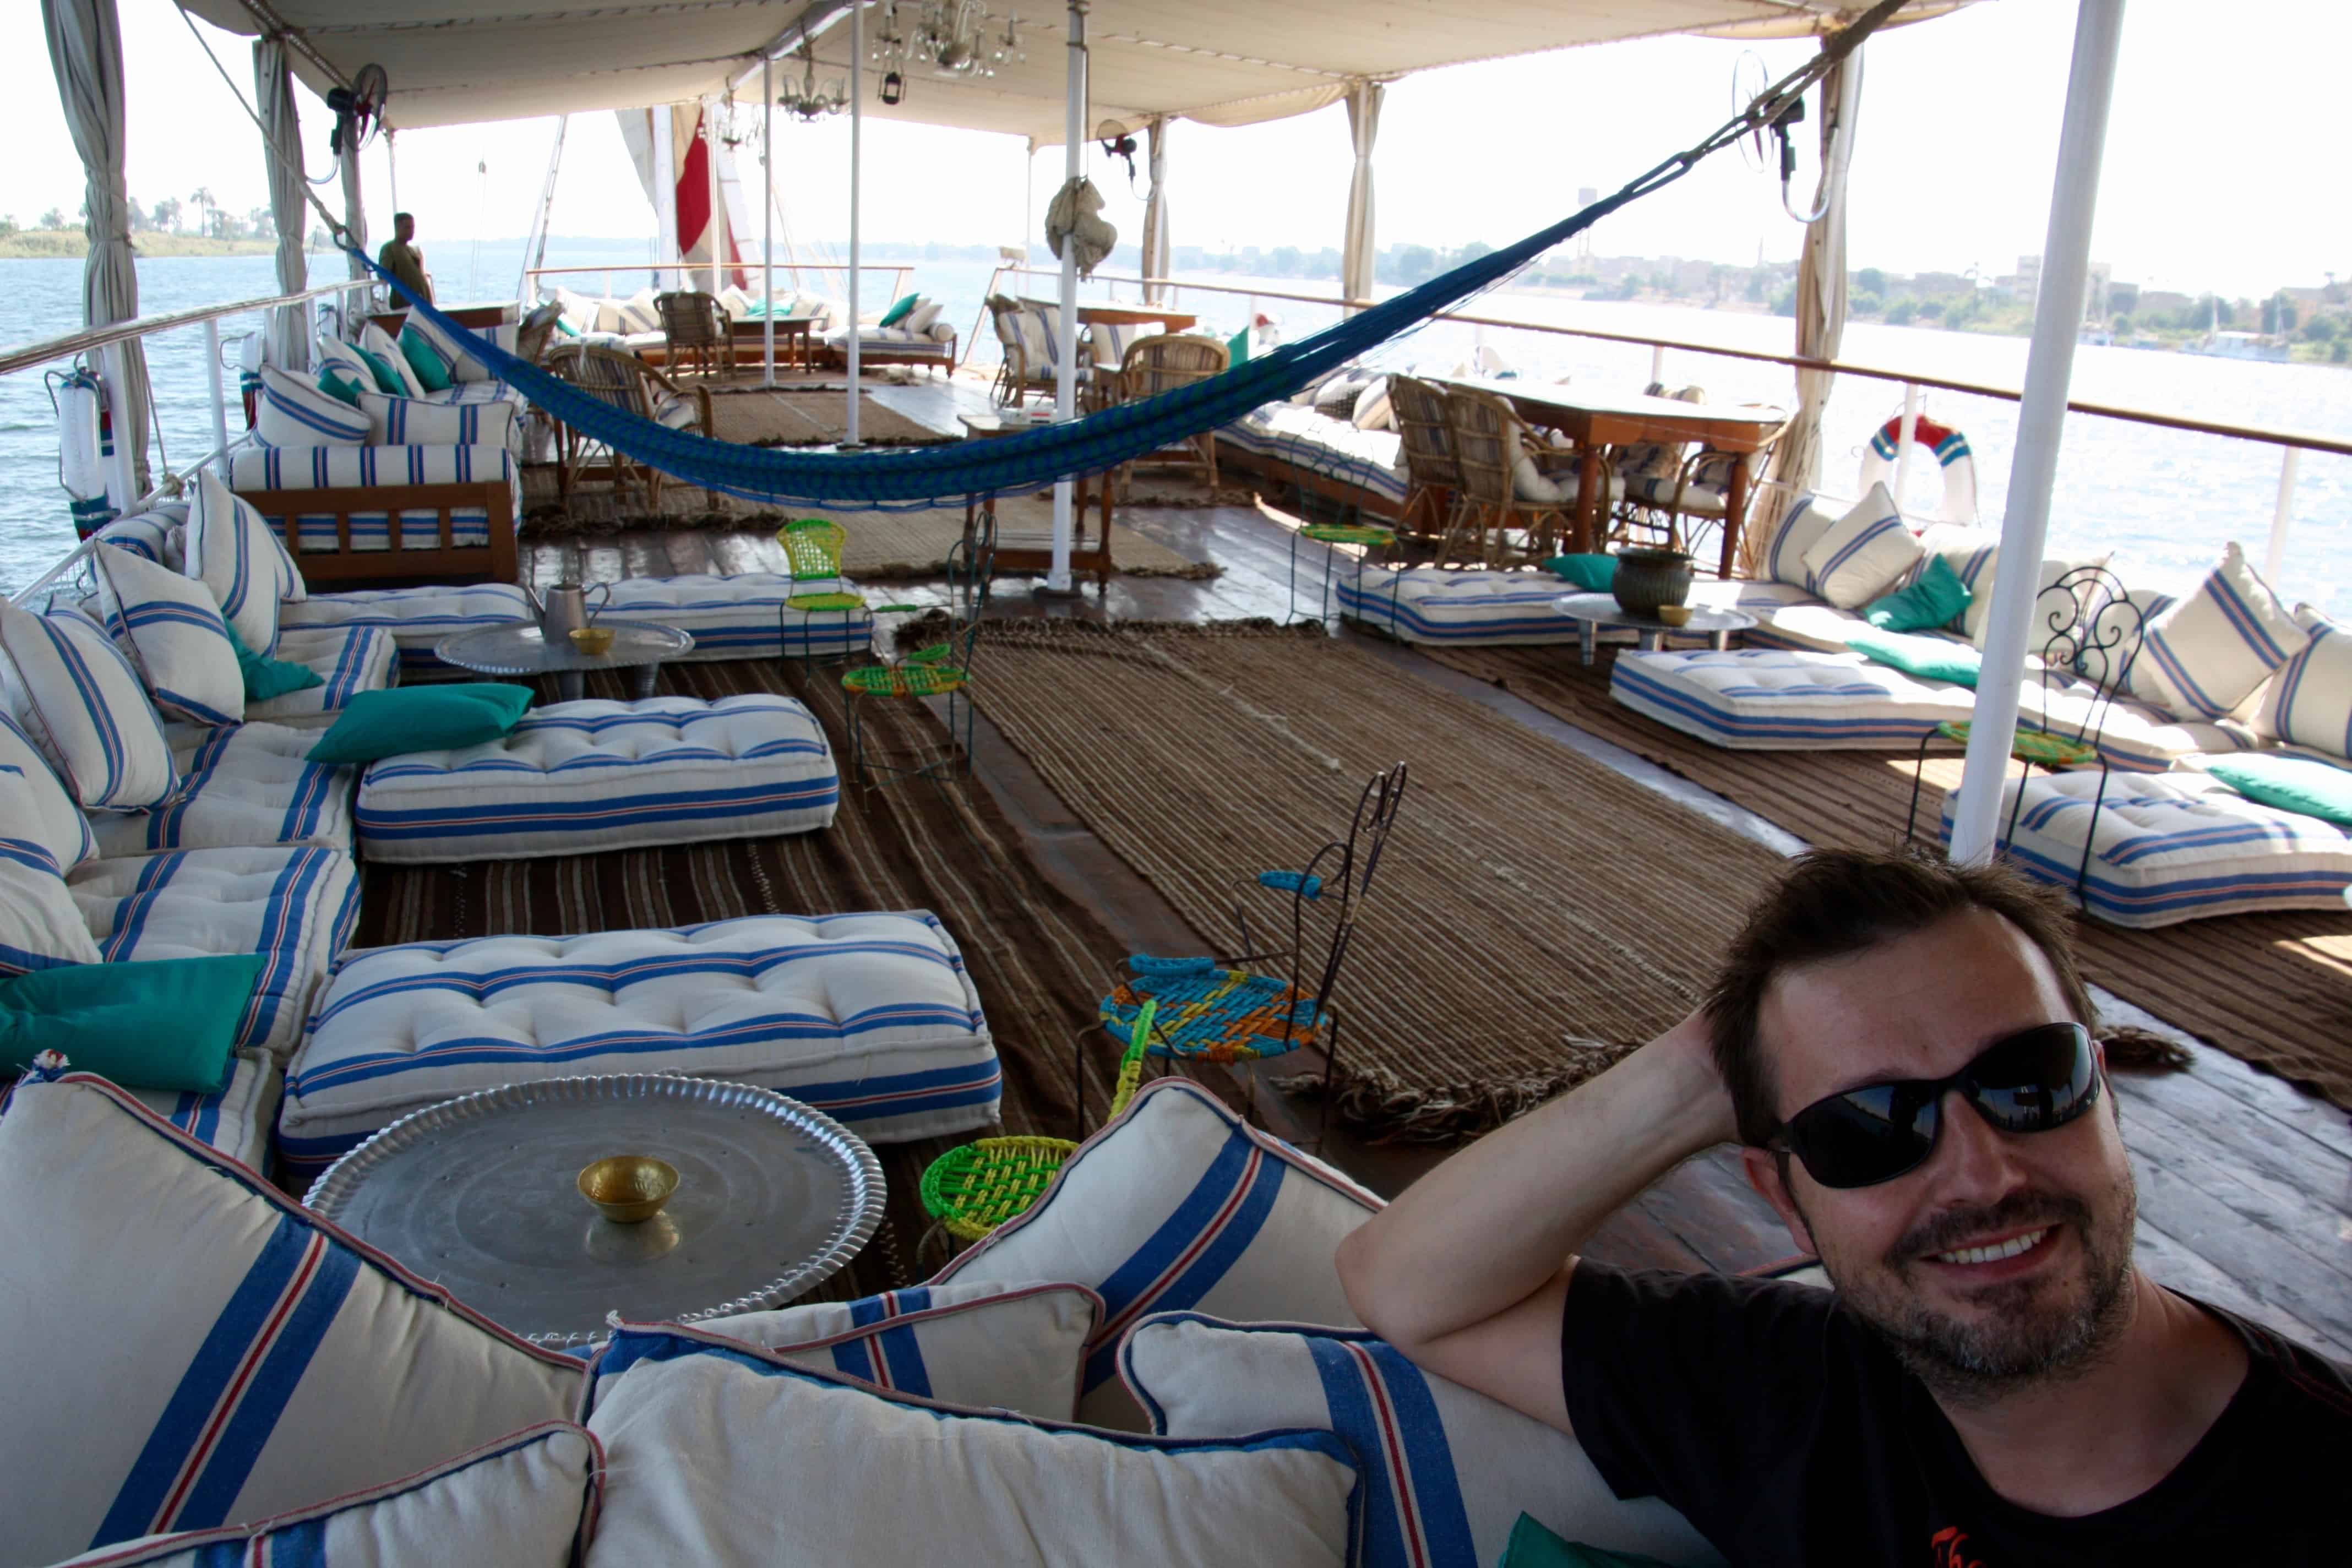 The cushion-strewn top deck of the Assouan, a traditional dahabiya nile cruise.